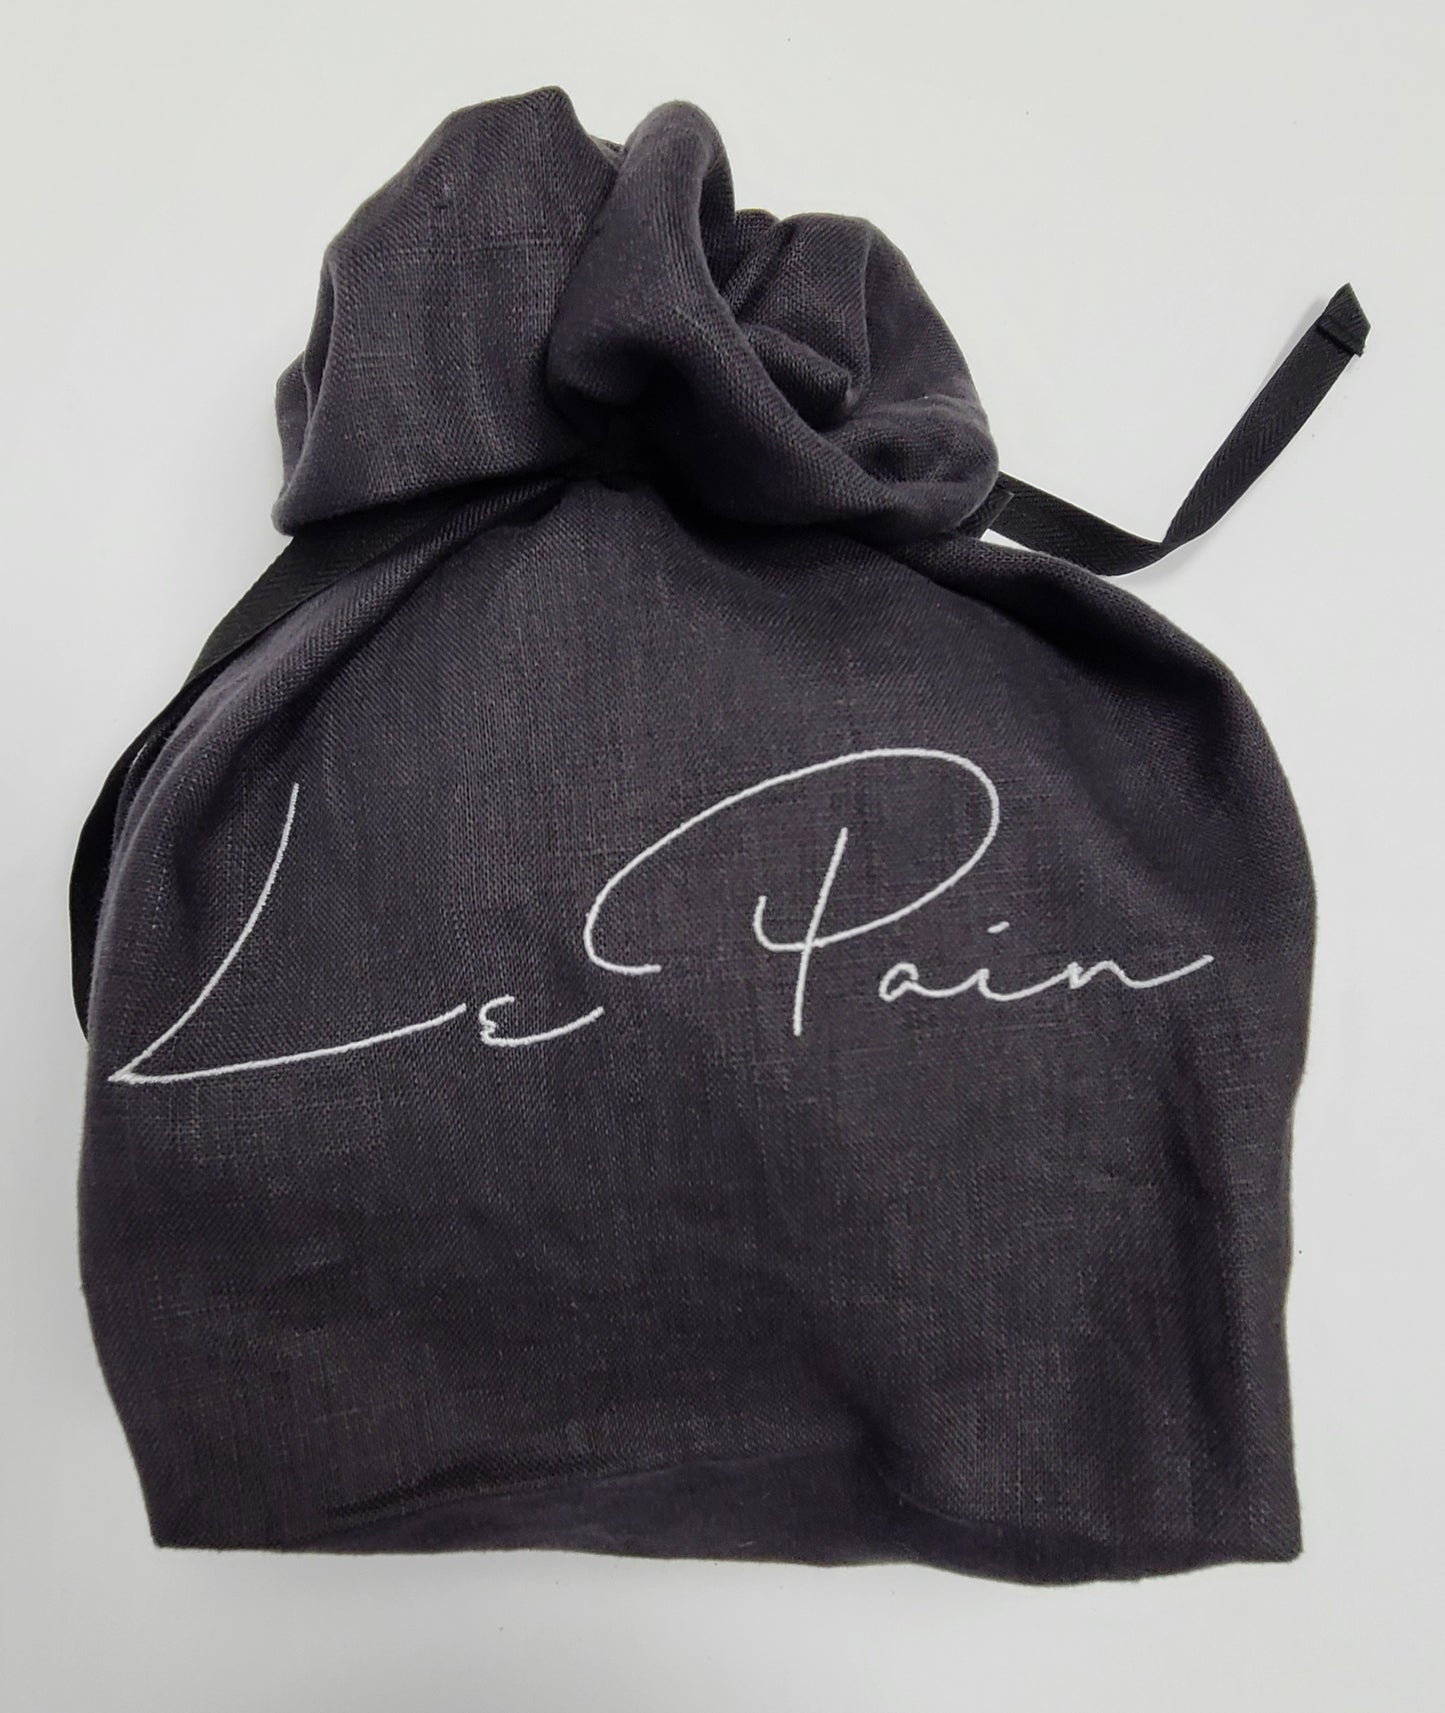 Le Pain Linen Round/Loaf Bread Bag